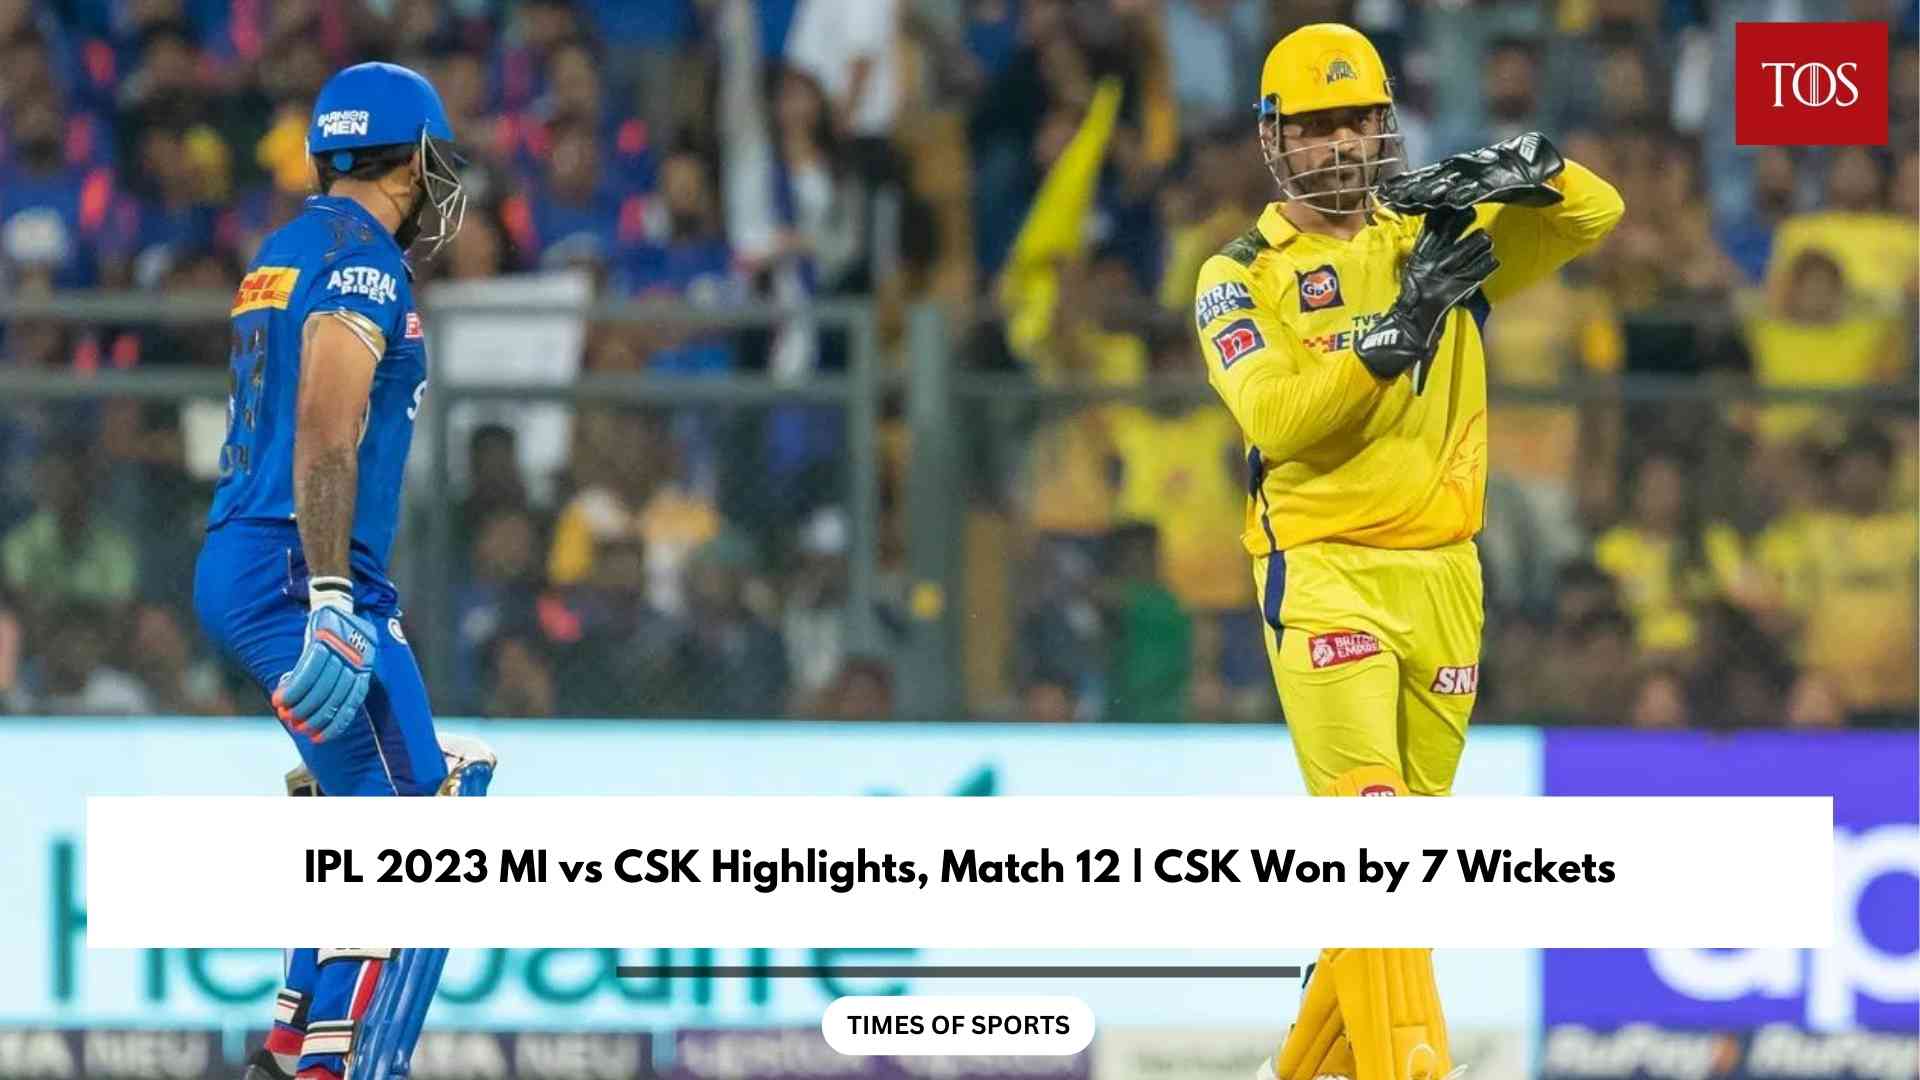 IPL 2023 MI vs CSK Highlights, Match 12 CSK Won by 7 Wickets